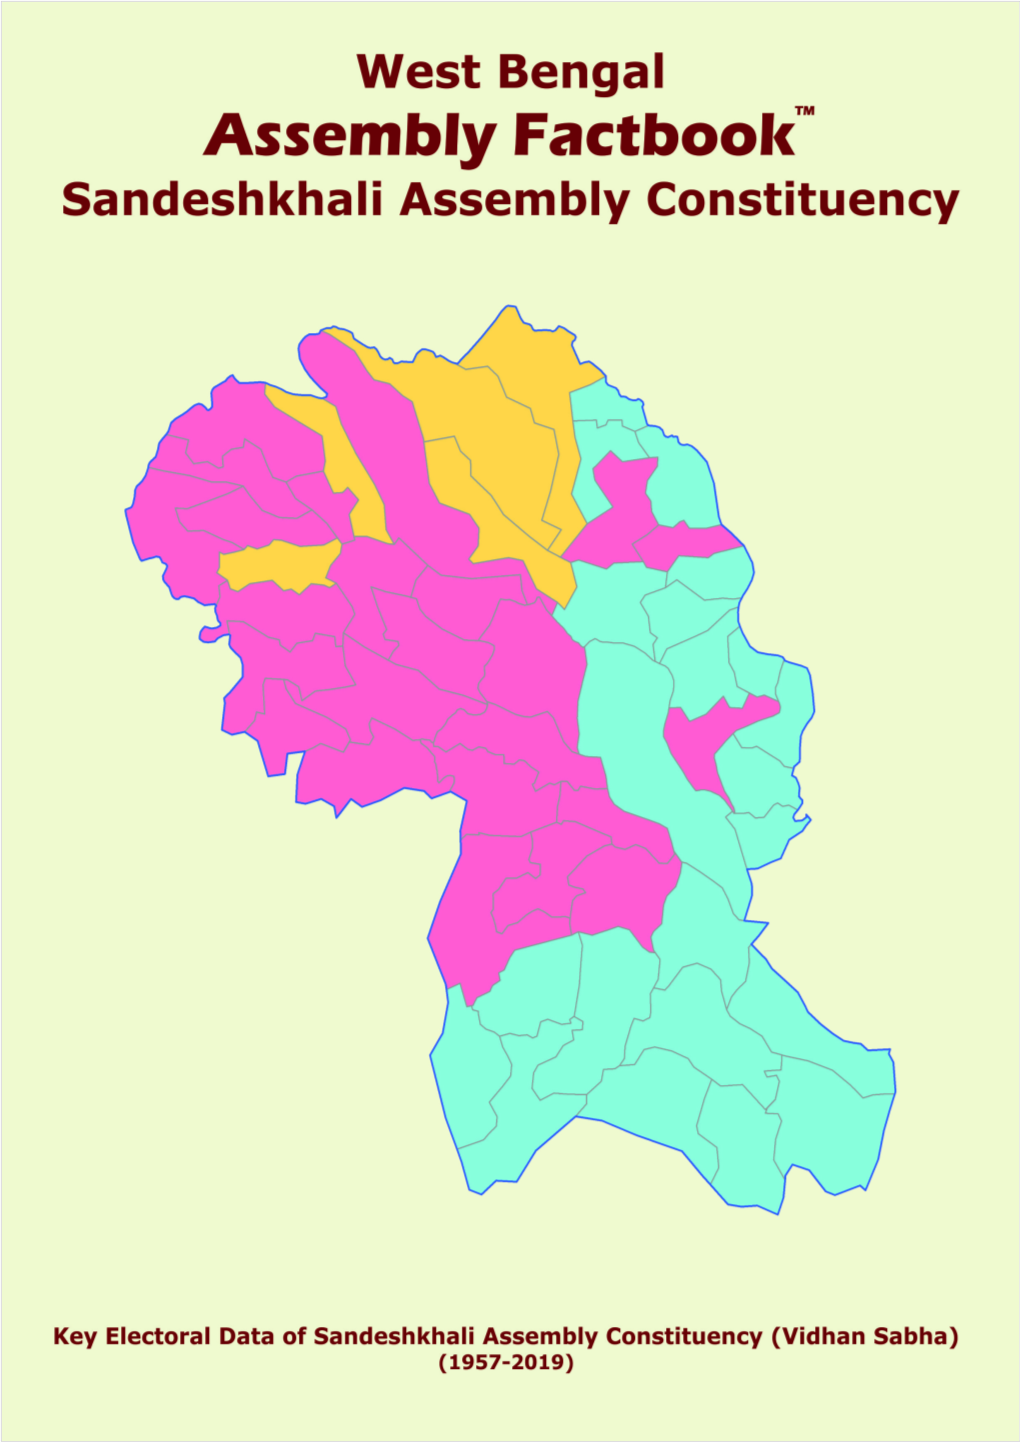 Sandeshkhali Assembly West Bengal Factbook